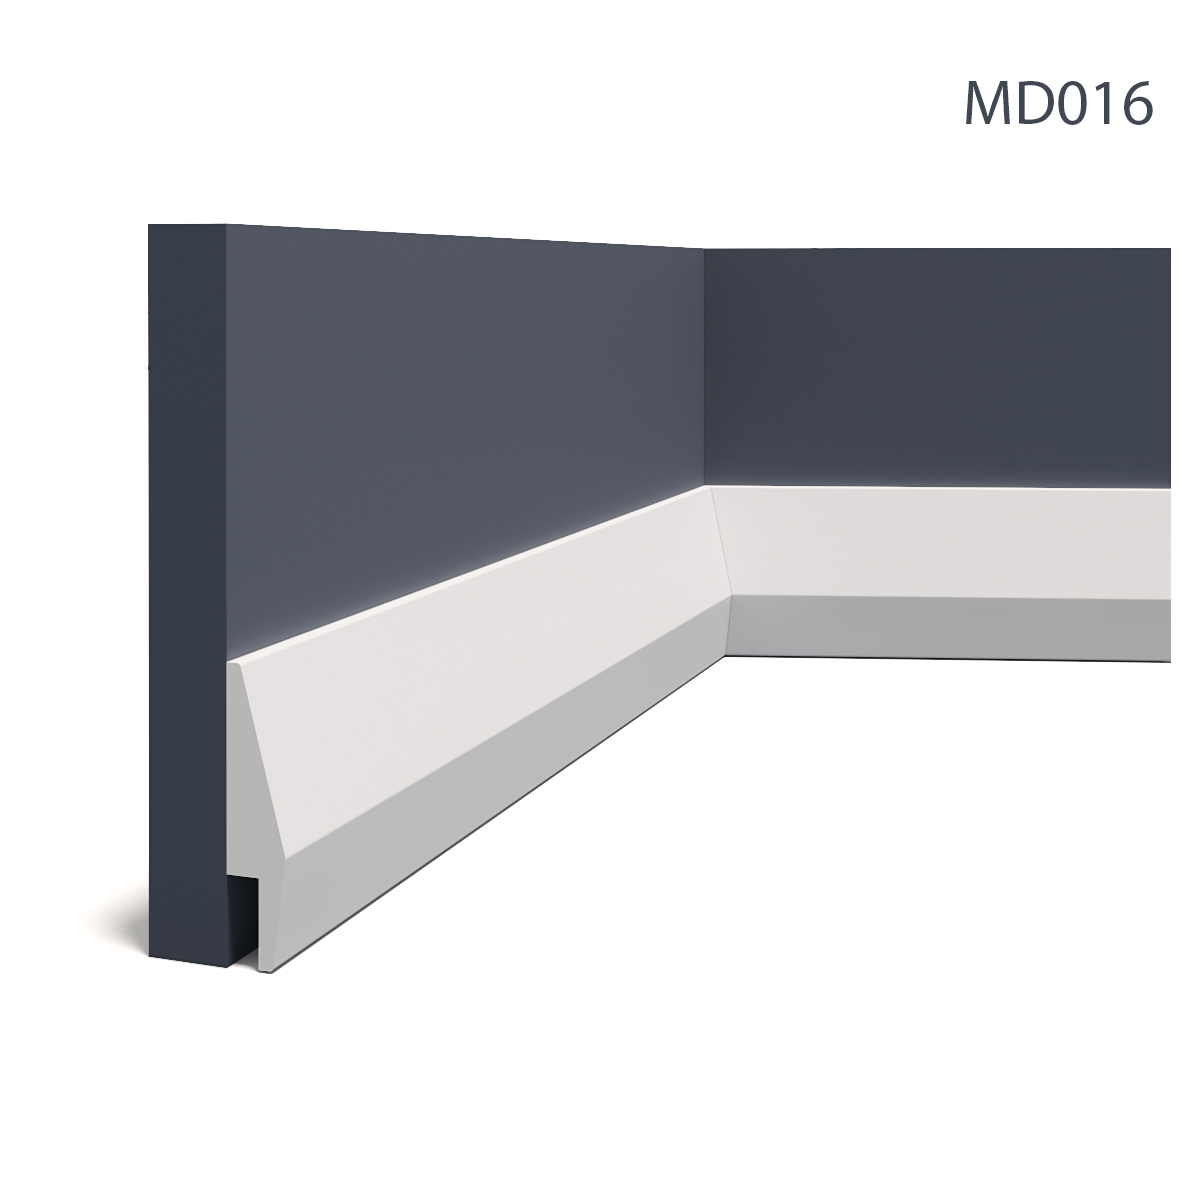 Plinte decorative Mardom Decor MRD-MD016, material: PolyForce